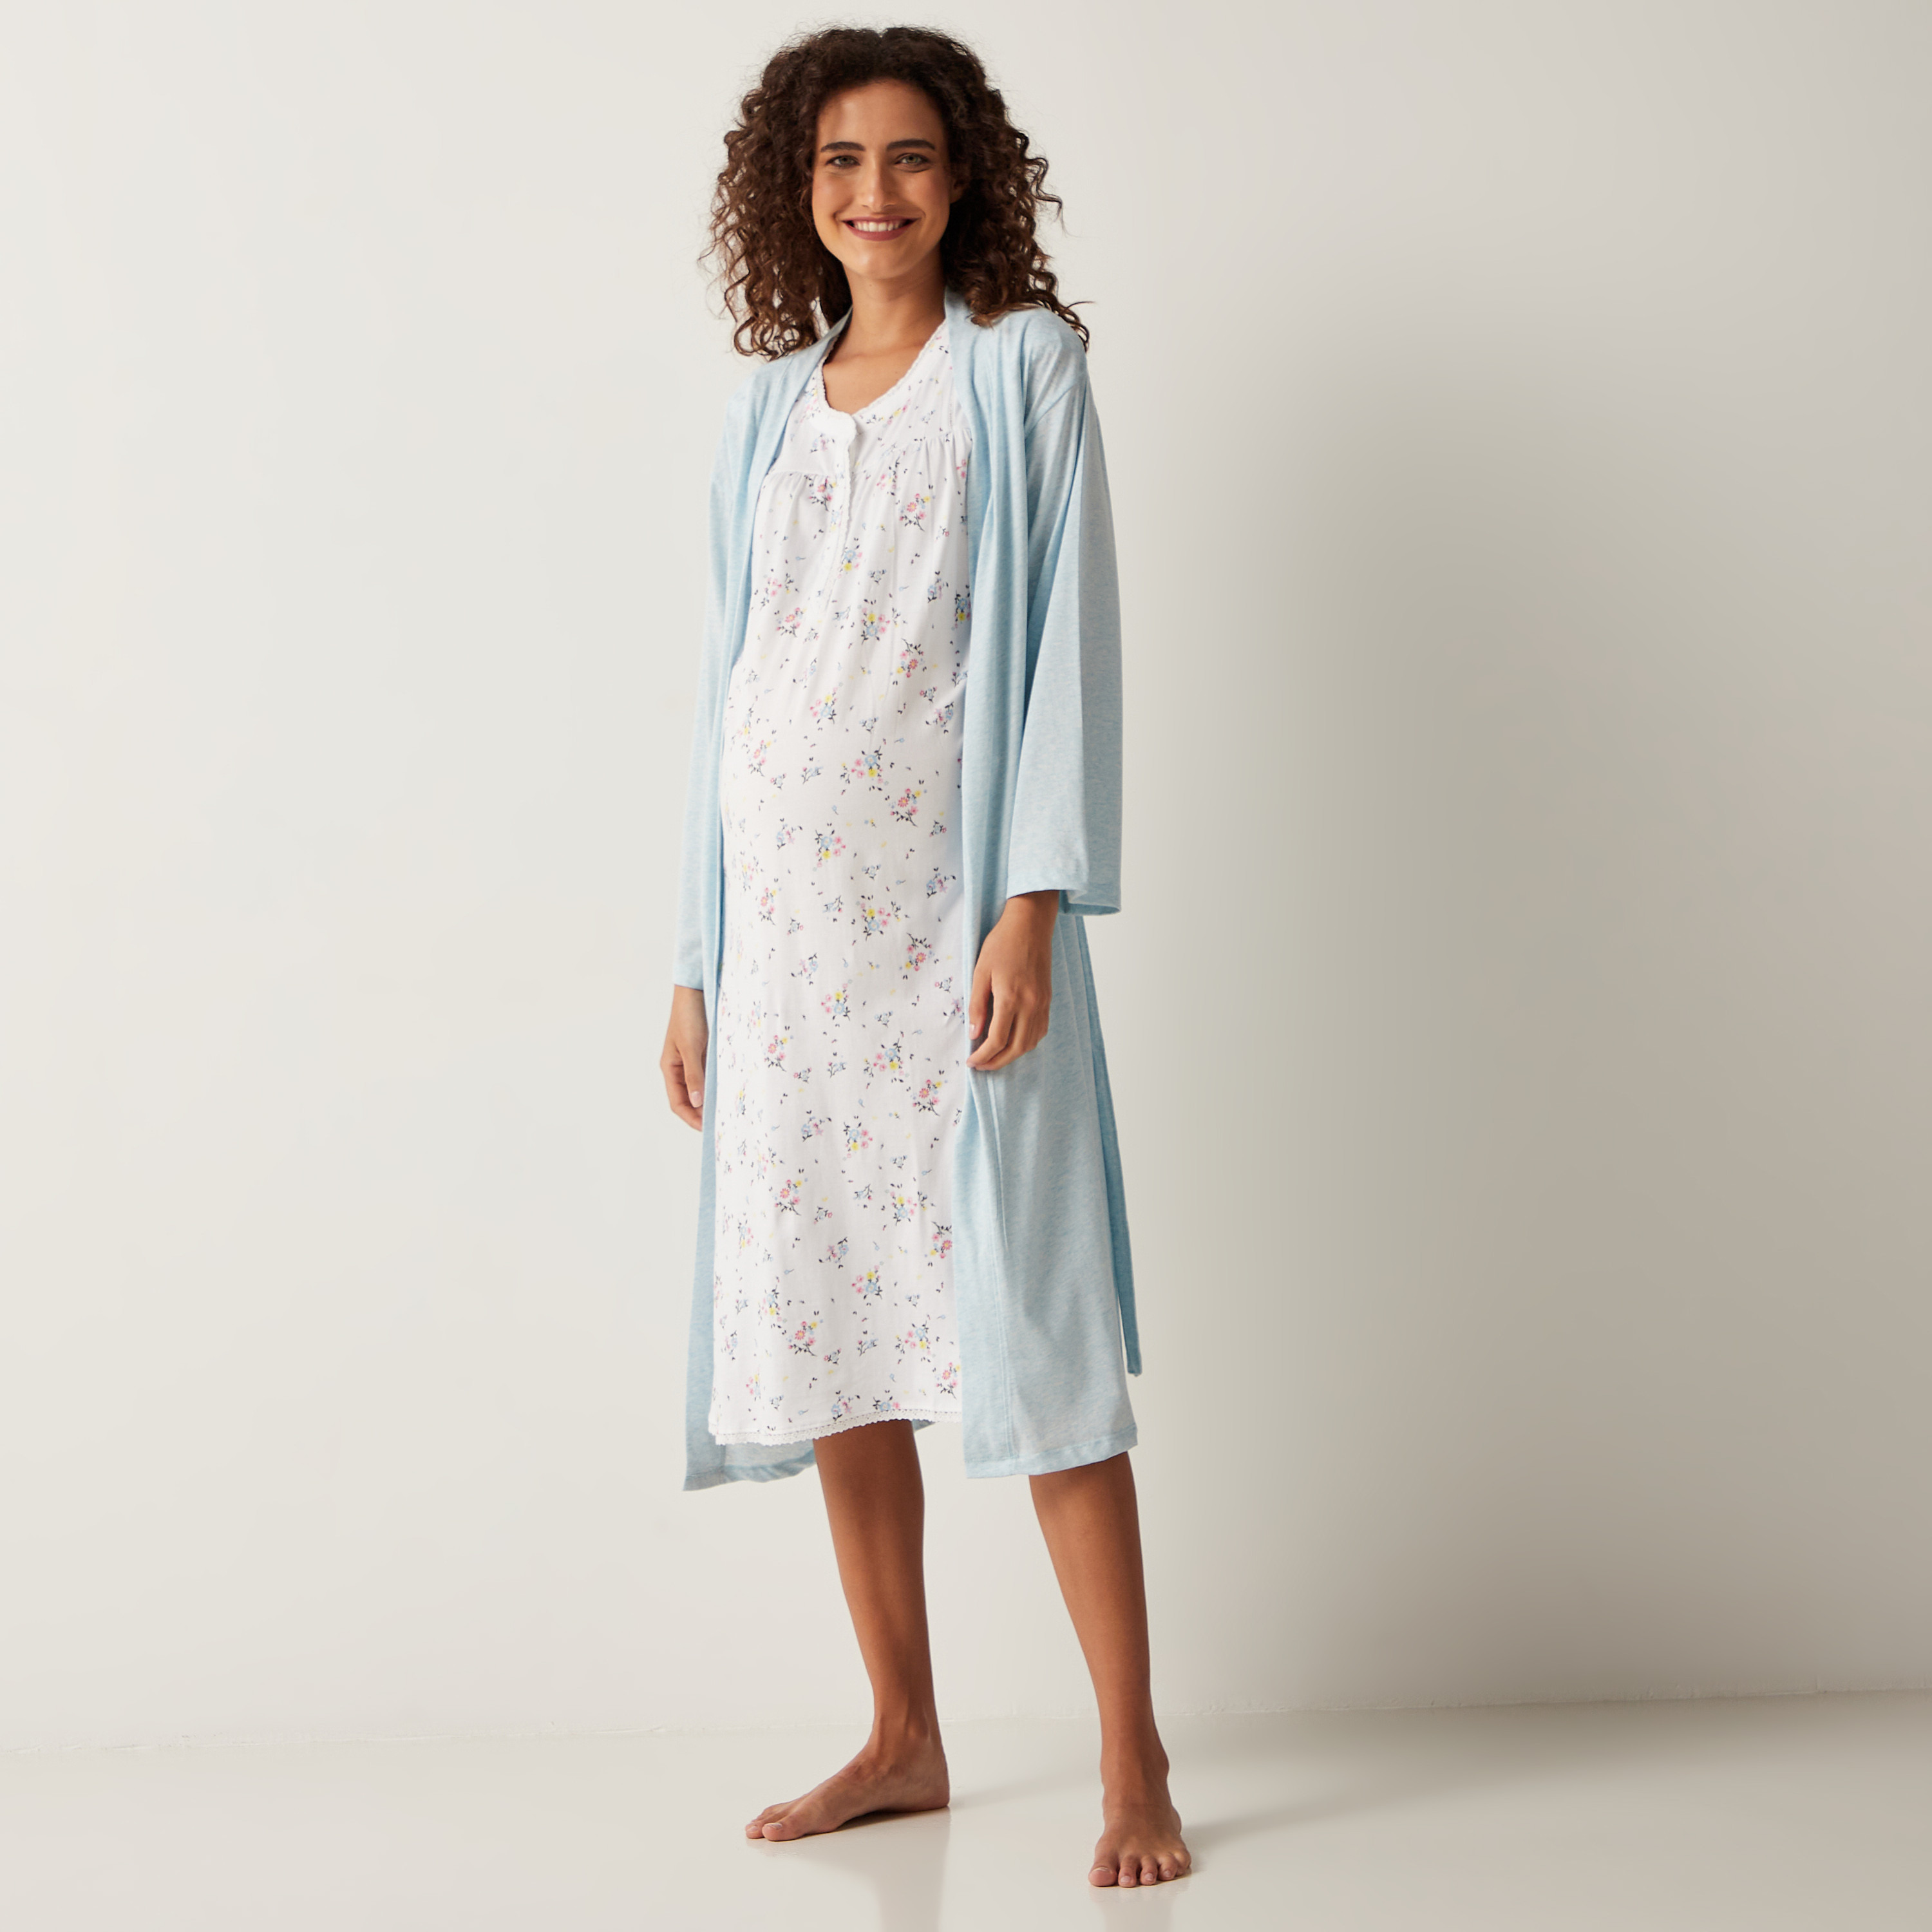 Ekouaer Nursing Gown 3 in 1 Delivery/Labor/Nursing Nightgown Women Maternity  Hospital Gown Zipper Breastfeeding Sleepwear | Sleepwear women, Nightgowns  for women, Hospital gowns maternity